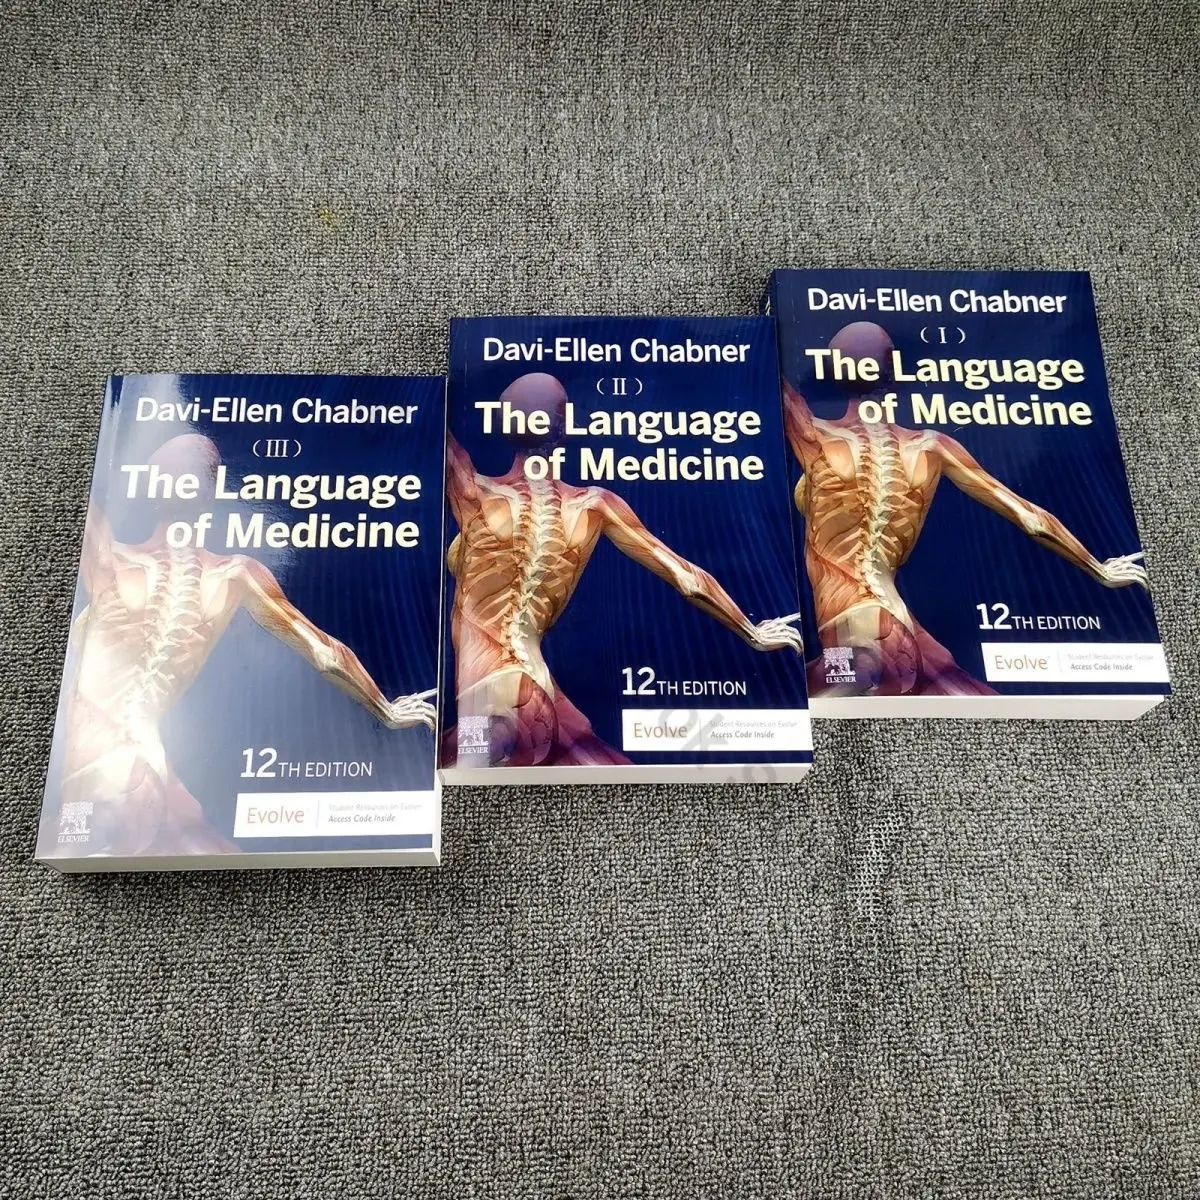 3books/set The Language of Medicine 12th Edition Davi-Ellen Chabner Full Color English Paper (High Quality Version)